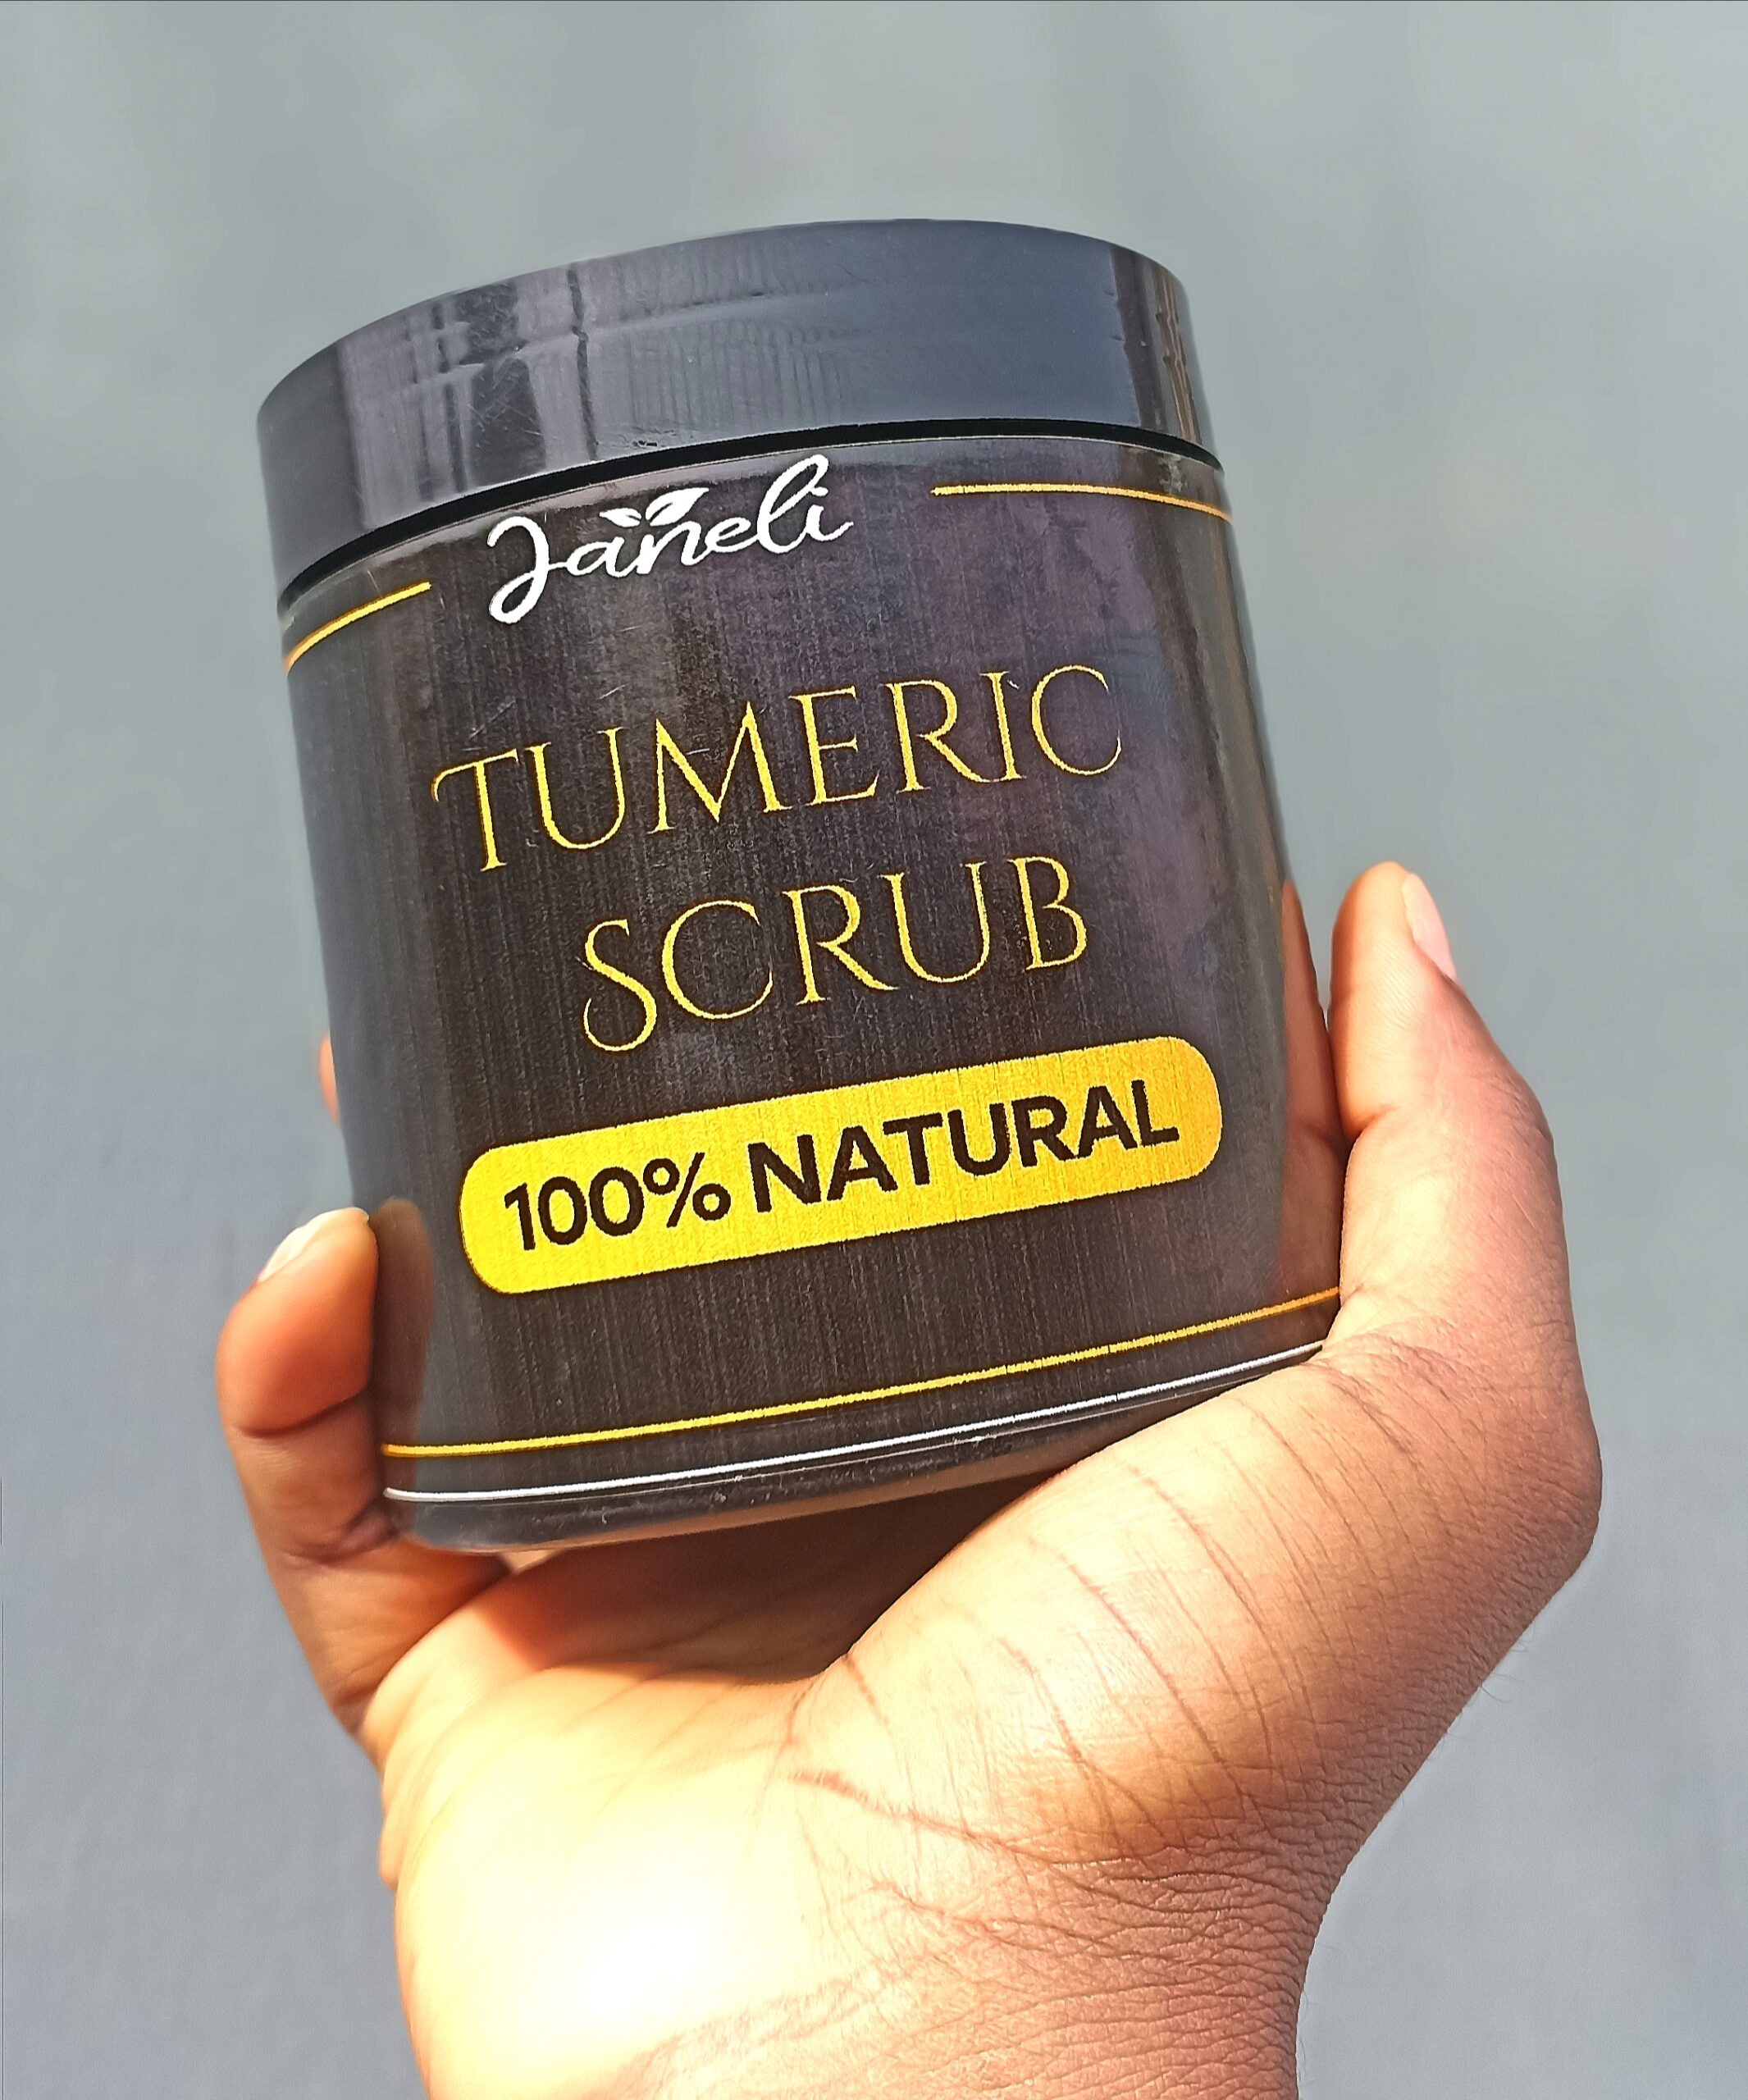 Tumeric Scrub bu Janeli Global sold on bellafricana marketplace